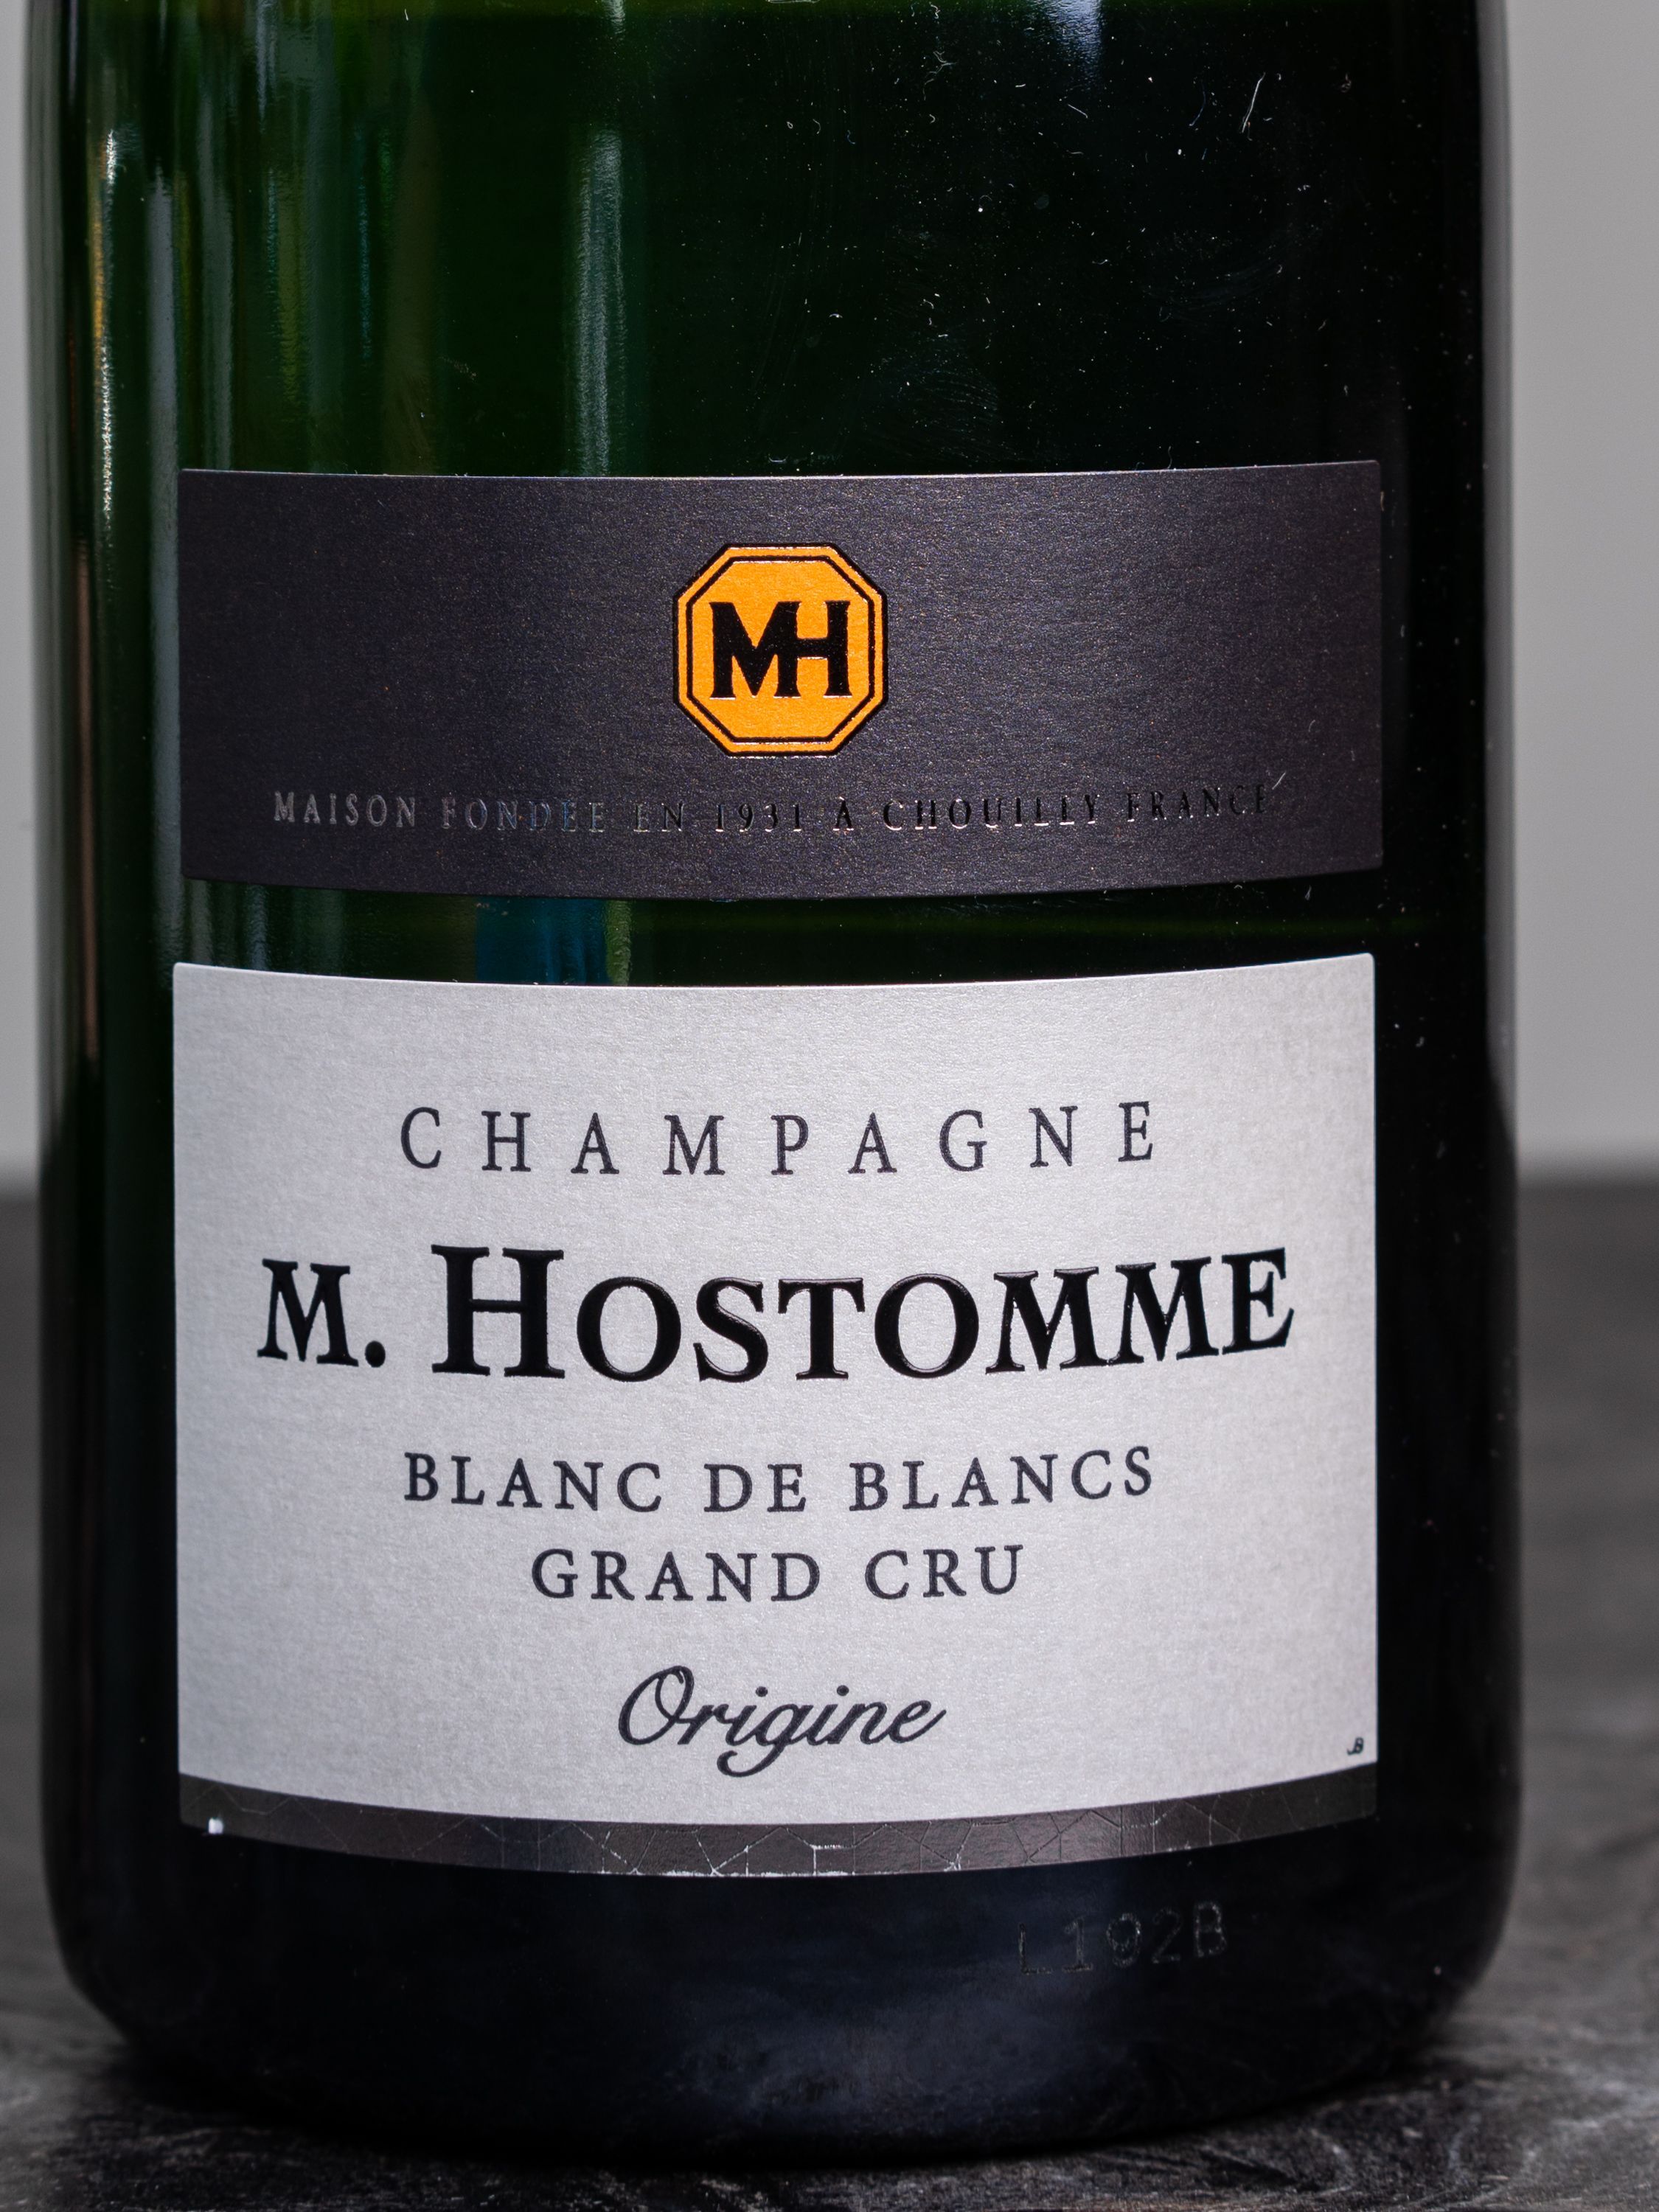 Этикетка M. Hostomme Origine Blanc de Blancs Grand Cru Champagne